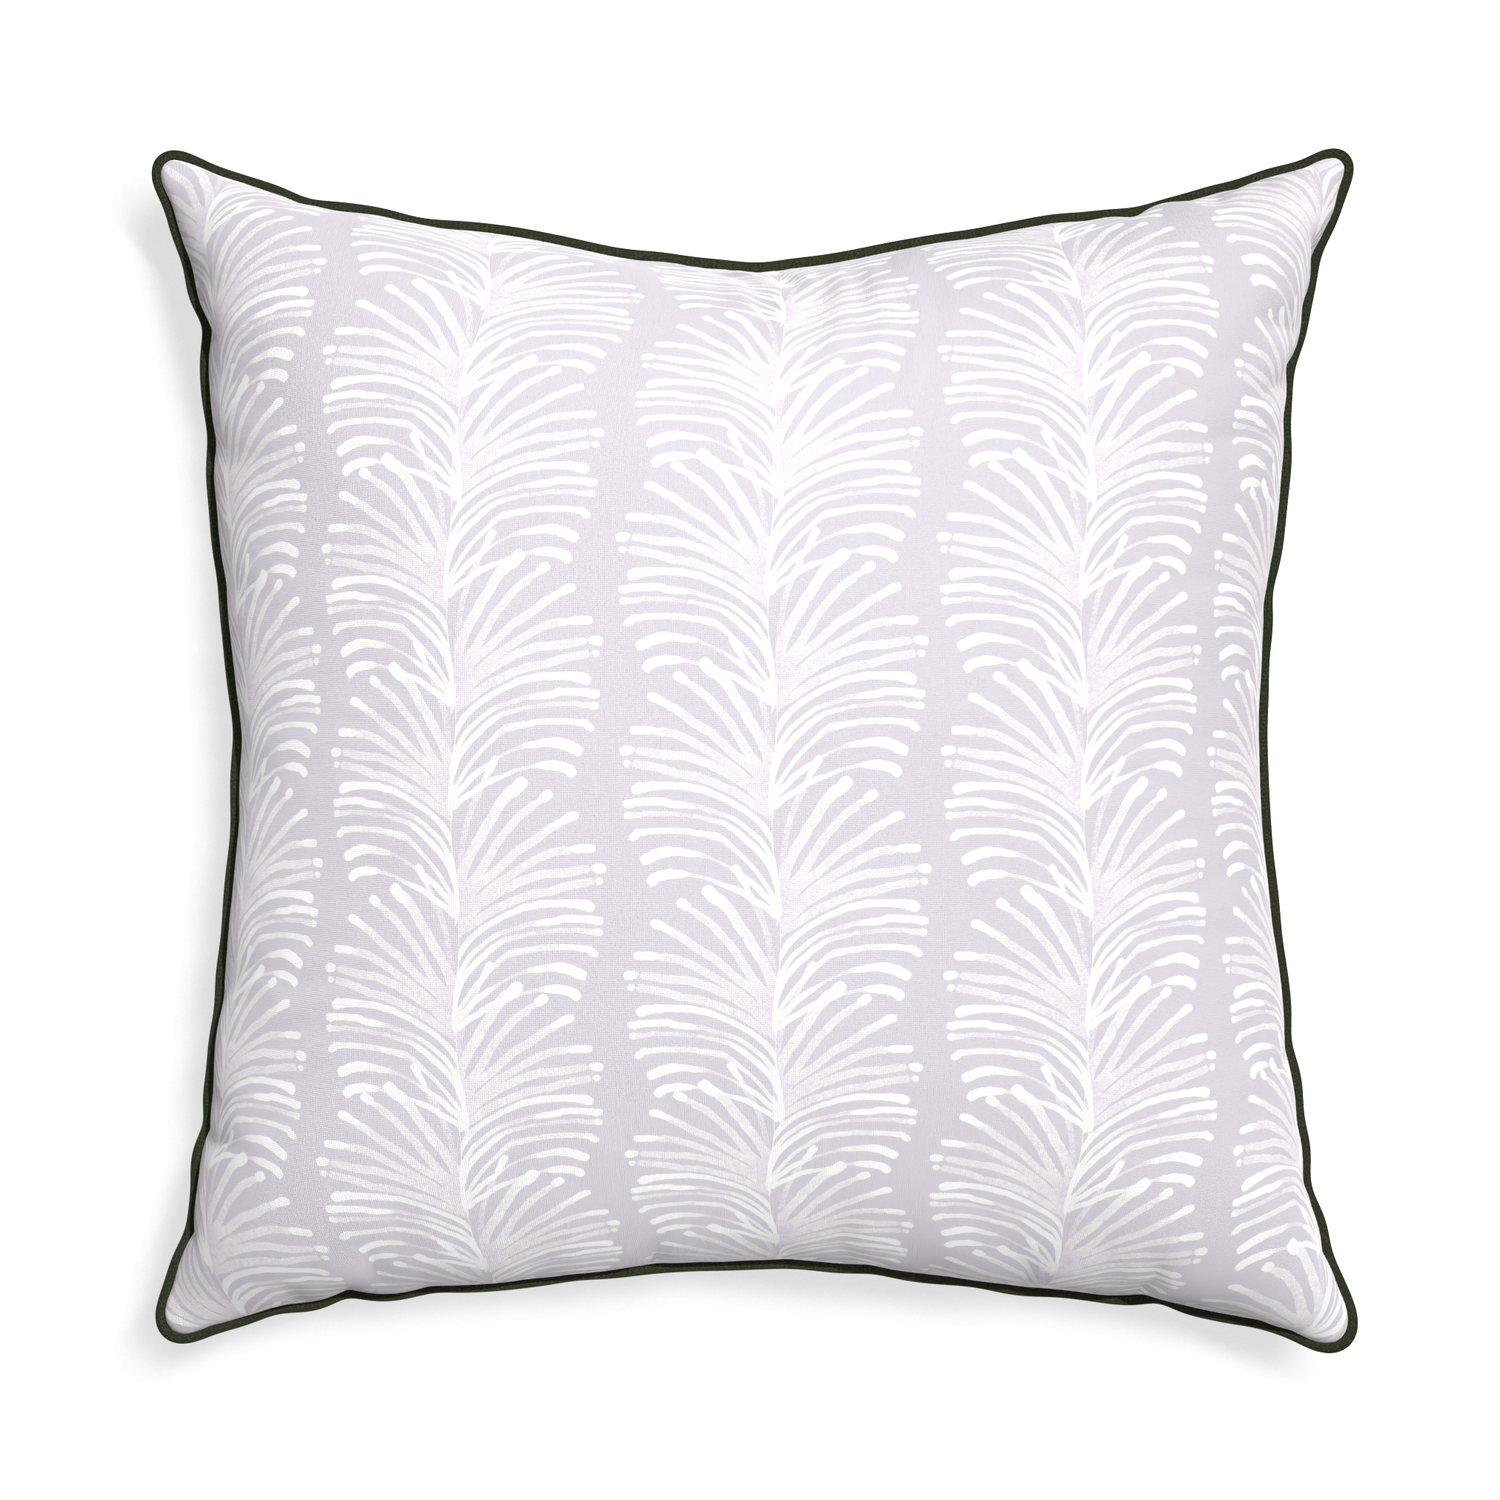 Euro-sham emma lavender custom lavender botanical stripepillow with f piping on white background